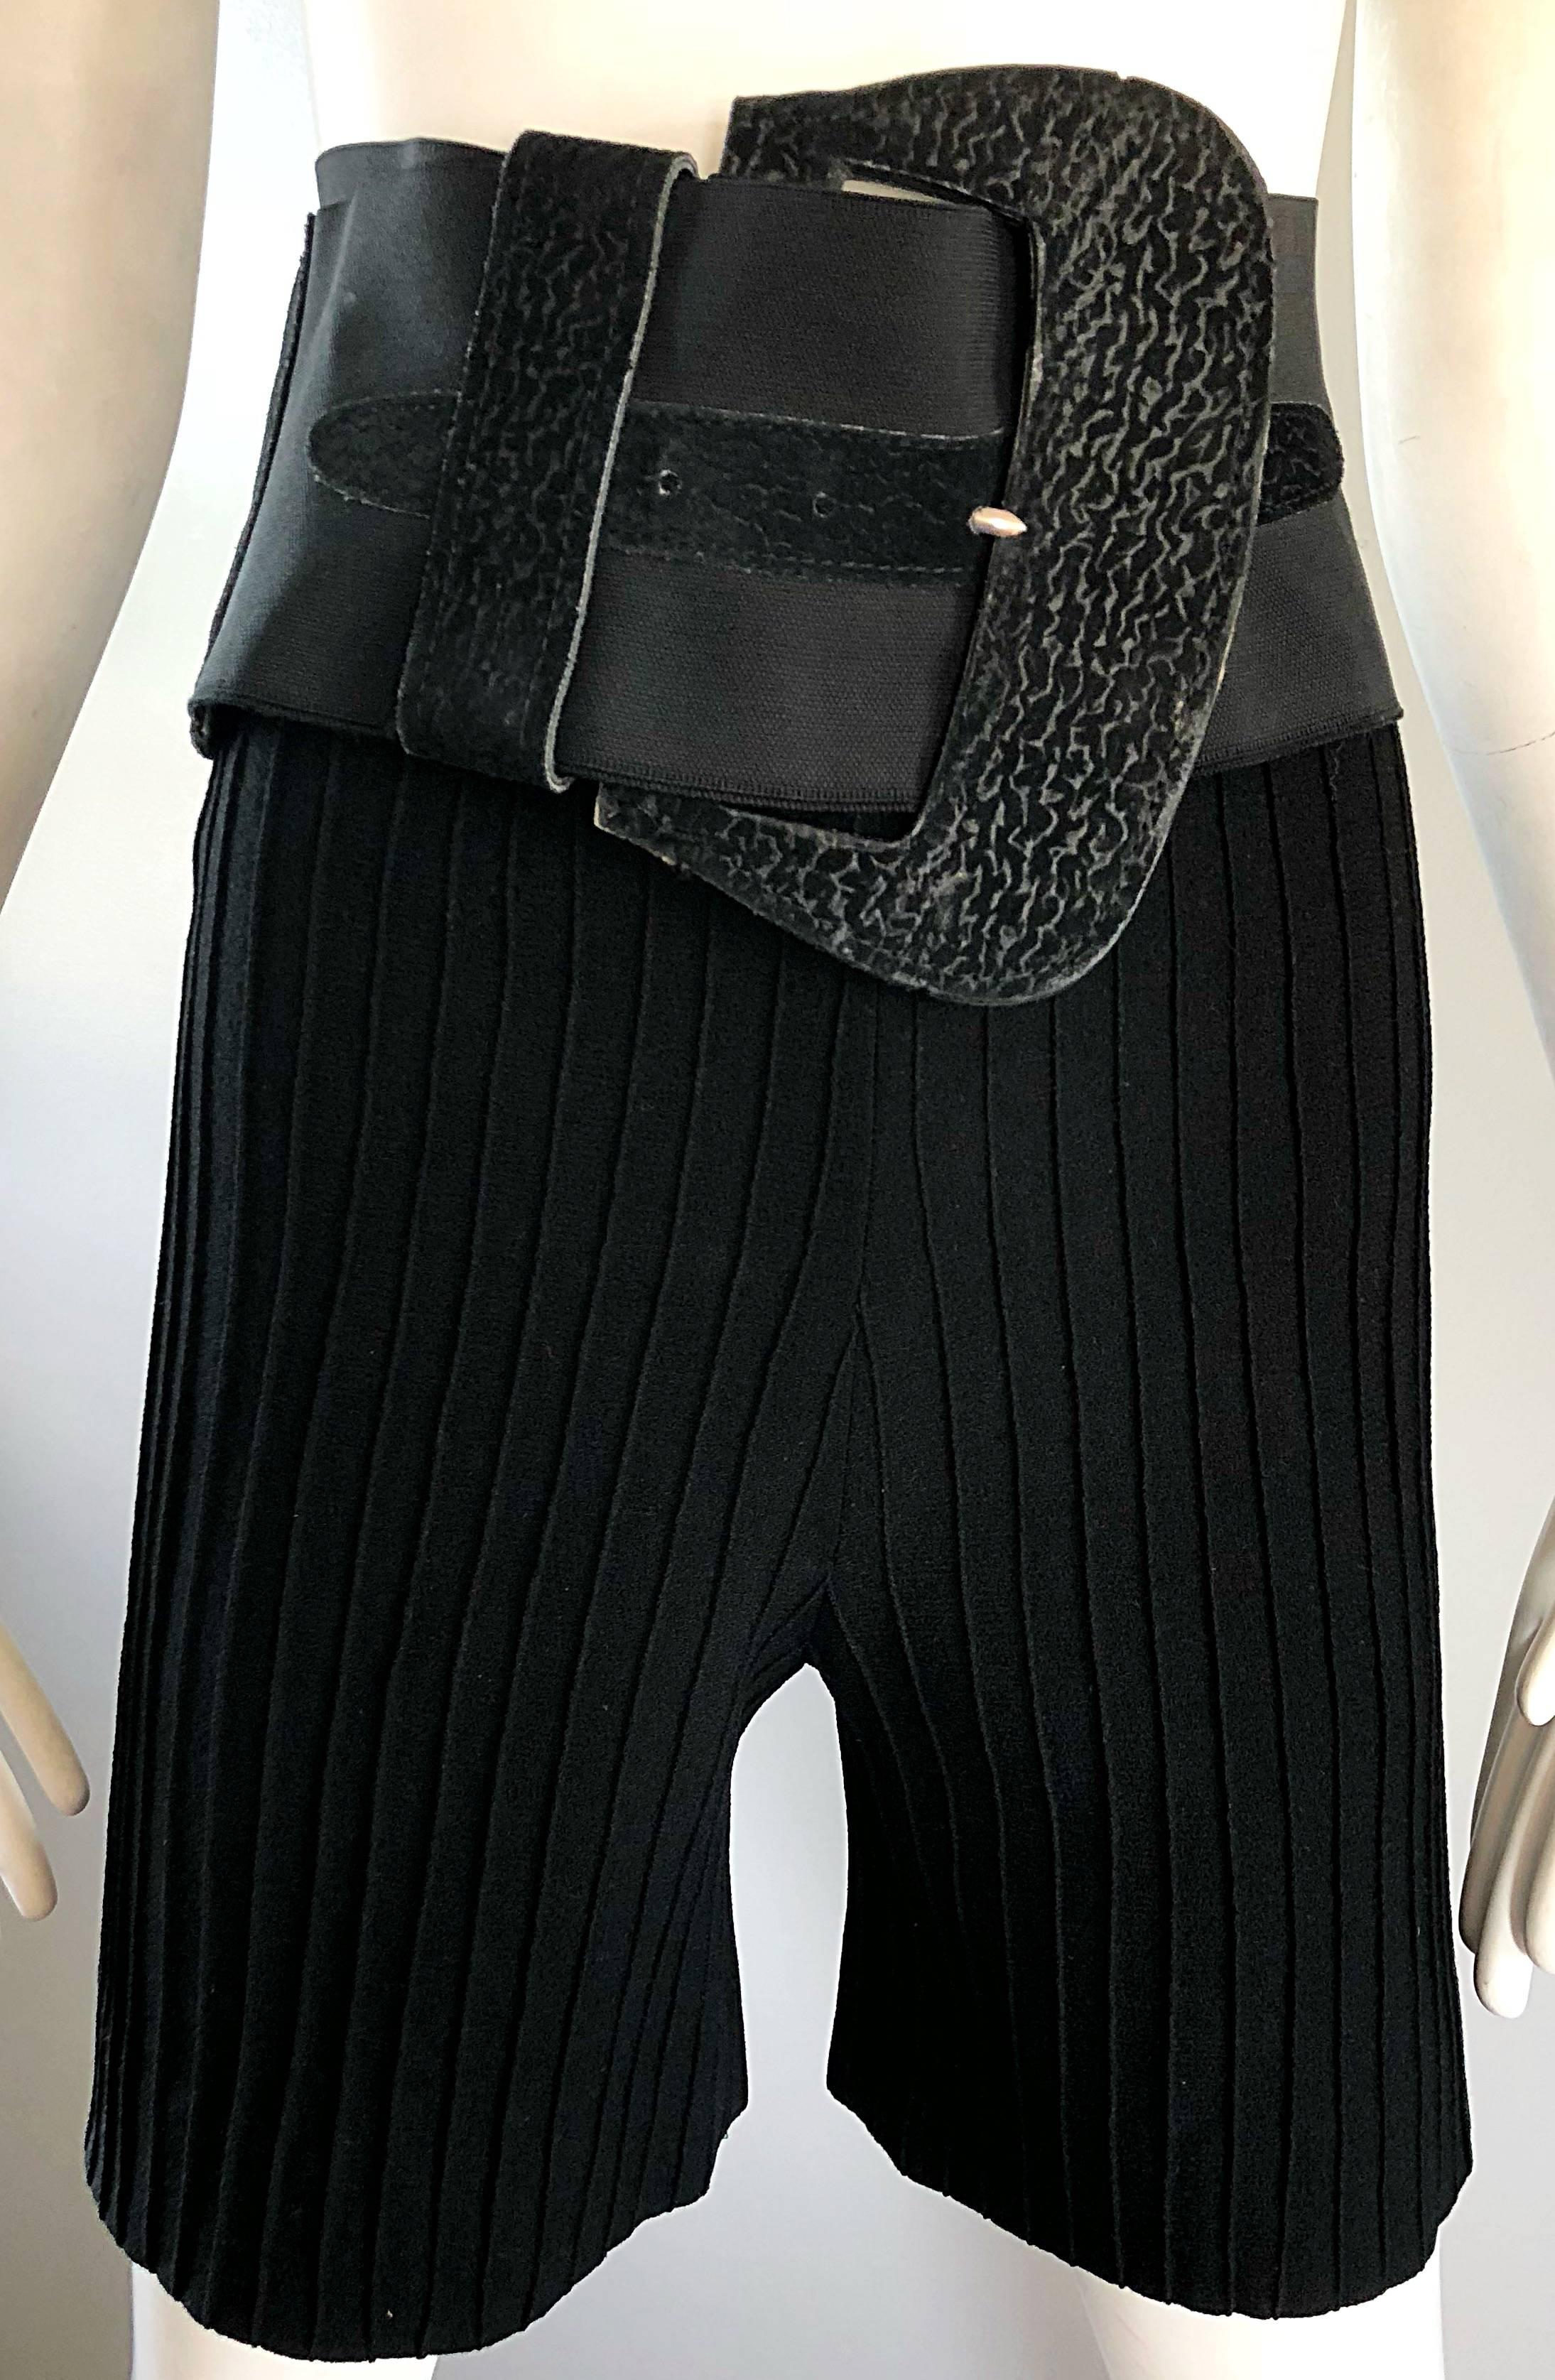 Cardinali Original Sample Black Wool High Waisted 1960s Shorts and Belt Set For Sale 1